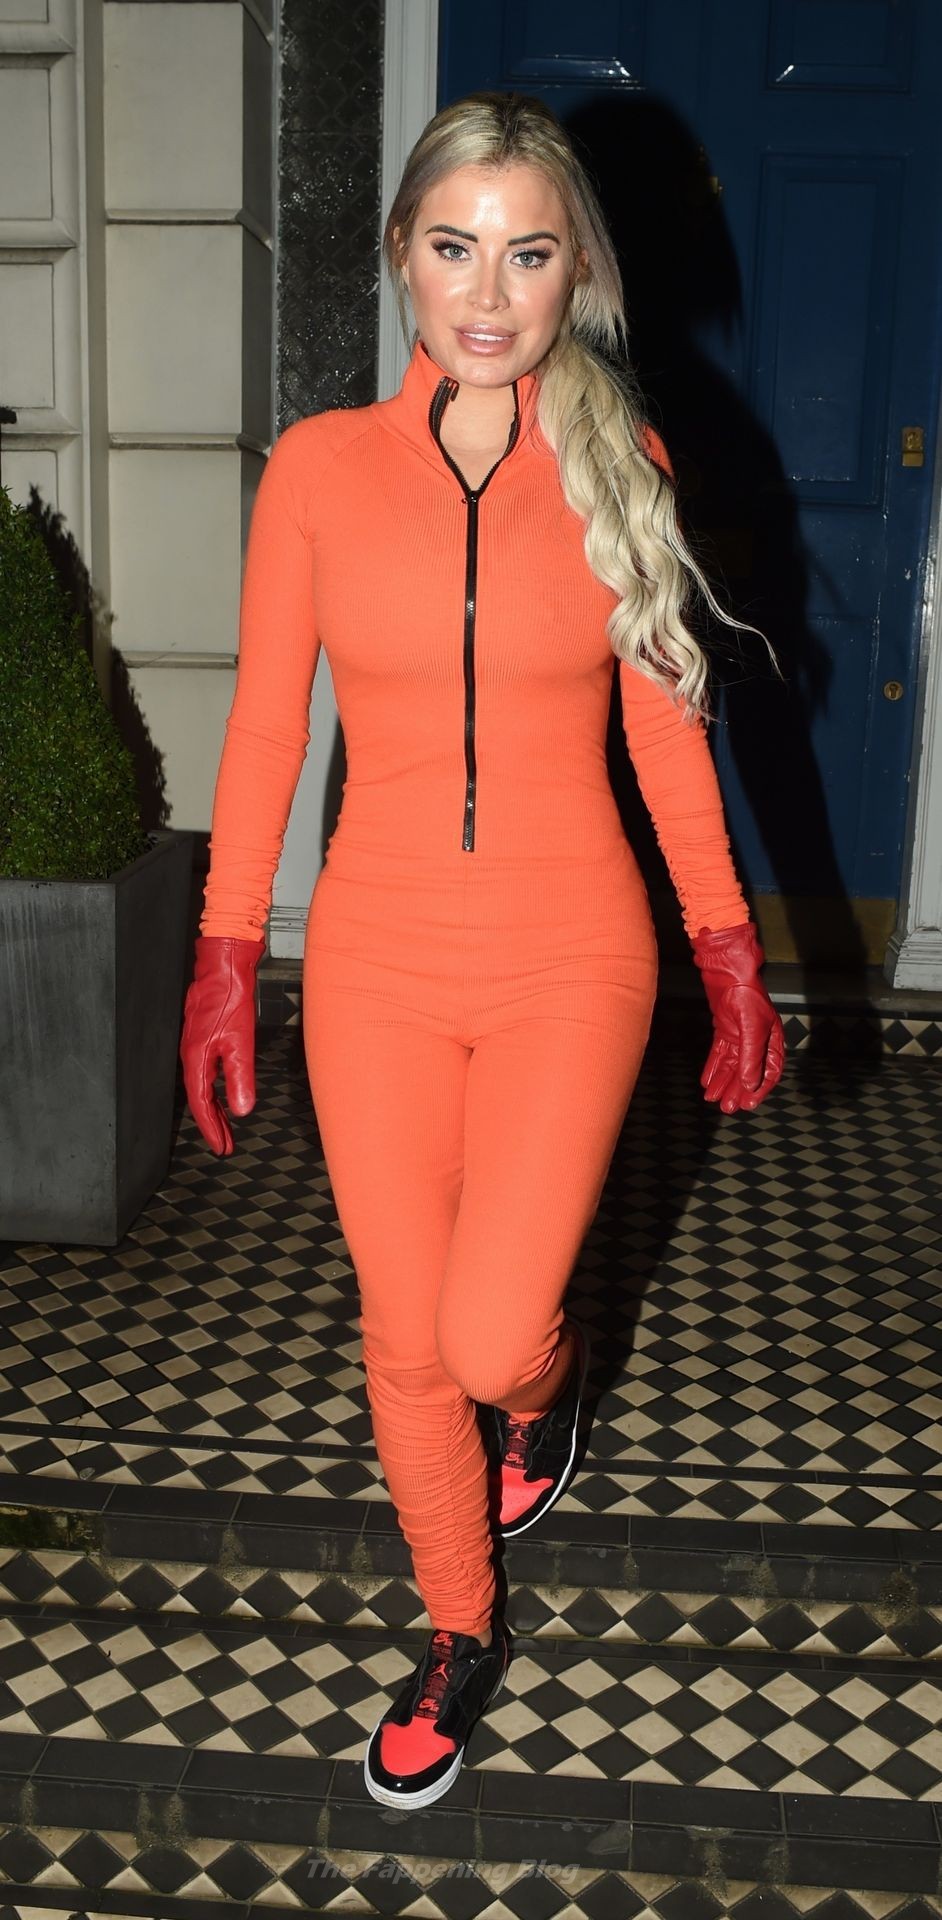 Carla Howe is Seen in an Orange Jumpsuit (17 Photos)